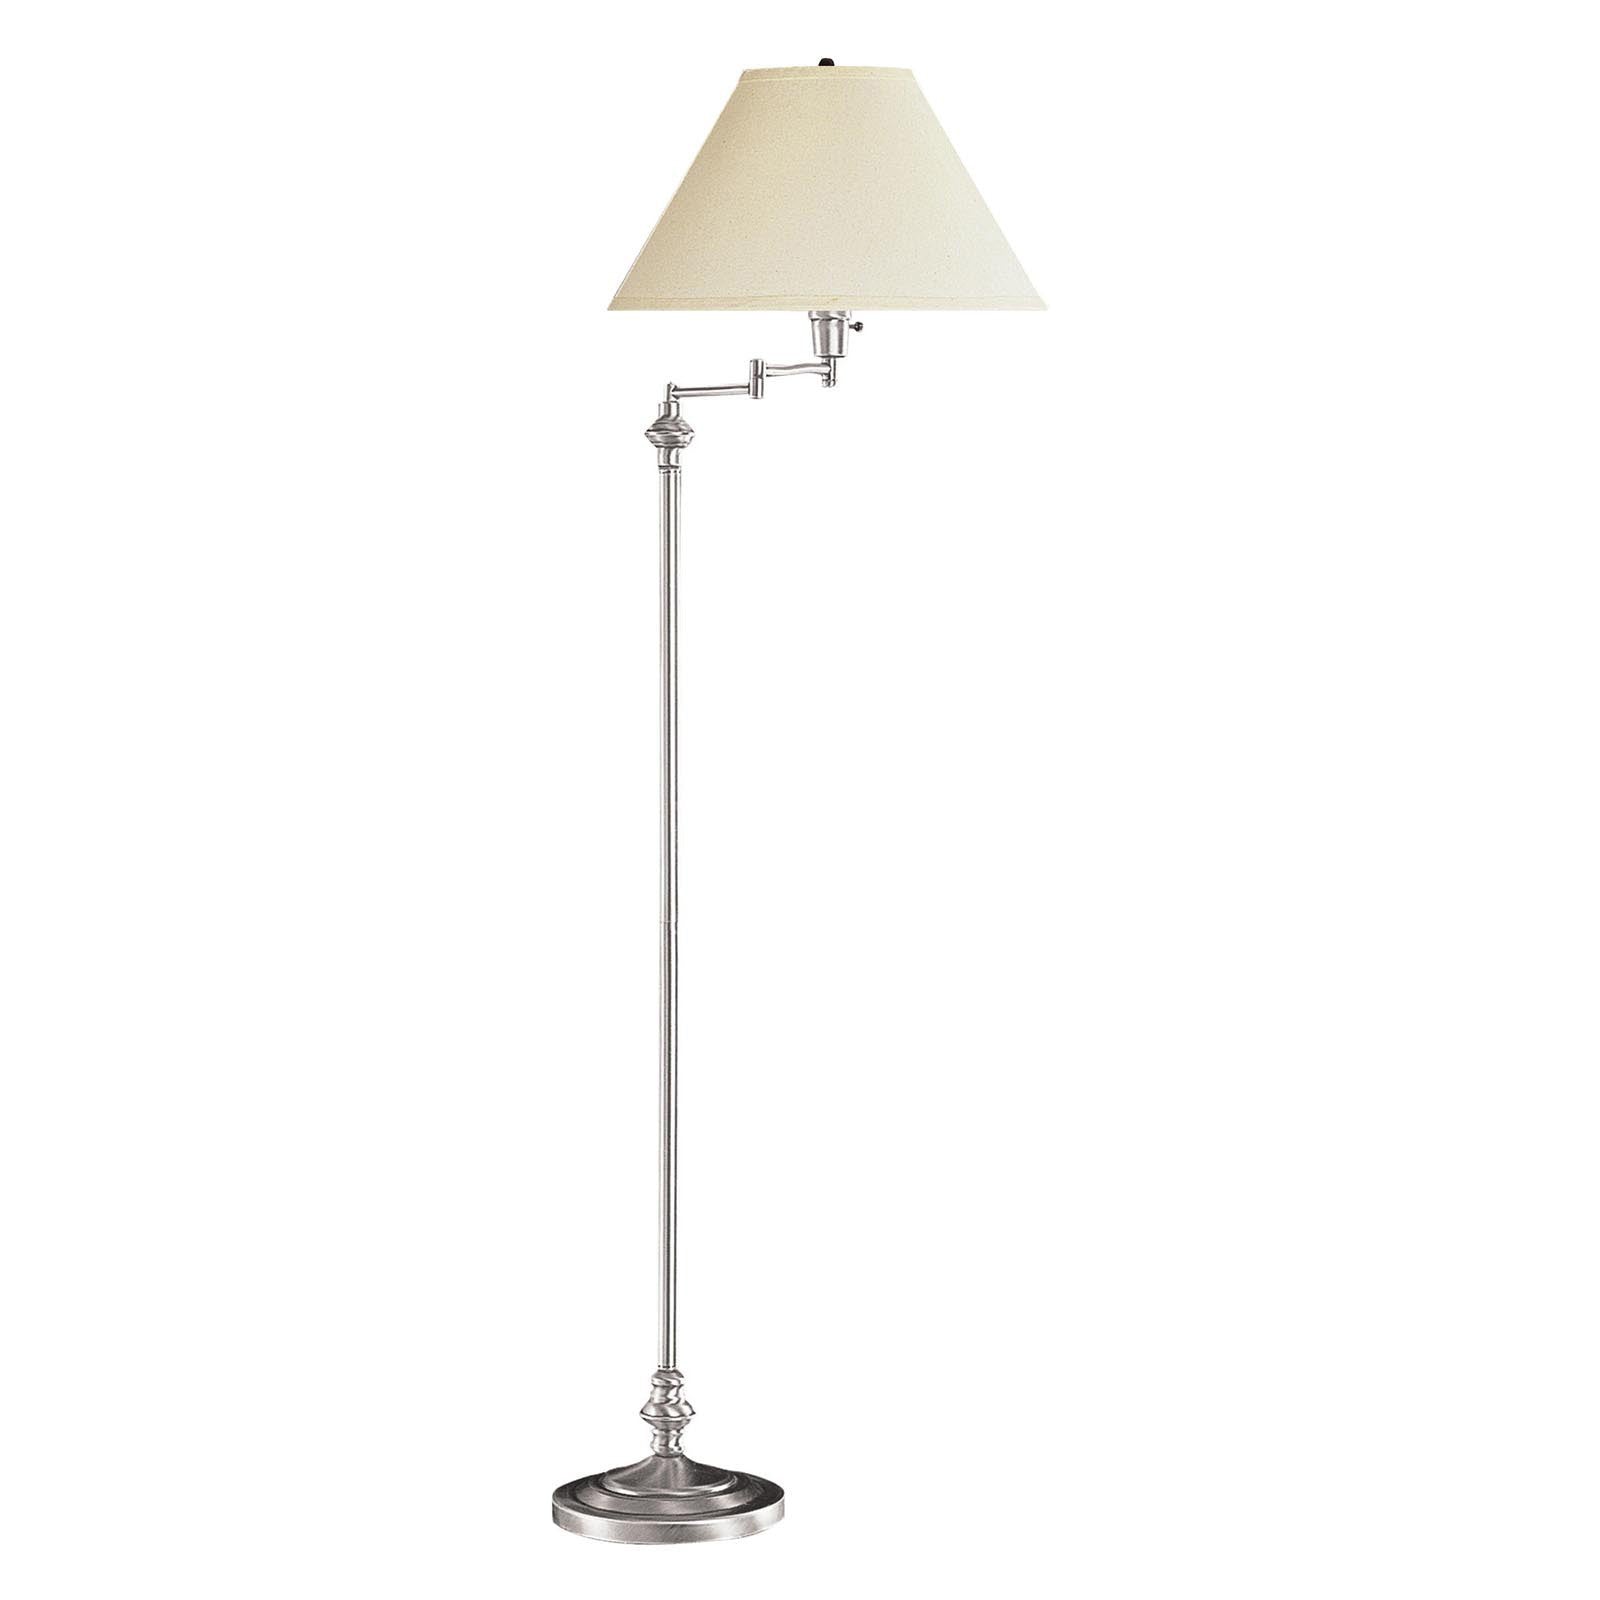 59" Nickel Swing Arm Floor Lamp With Beige Empire Shade